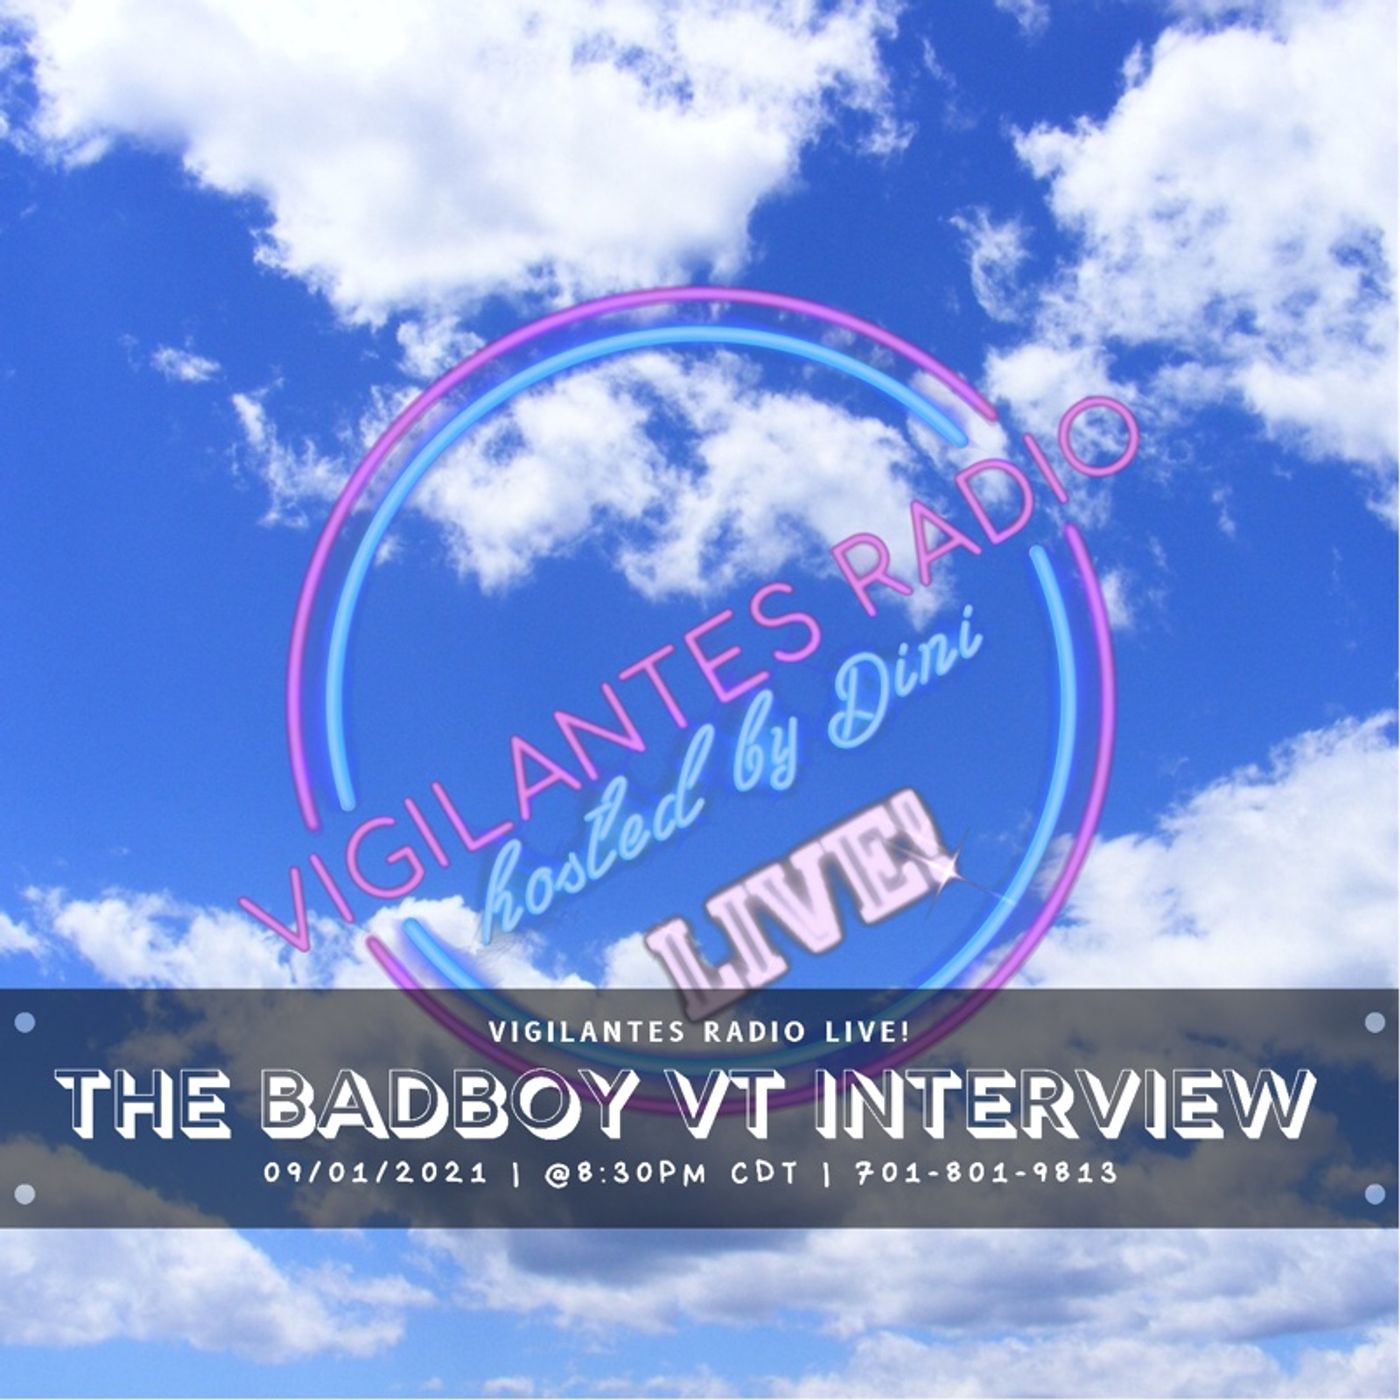 The Badboy VT Interview. Image